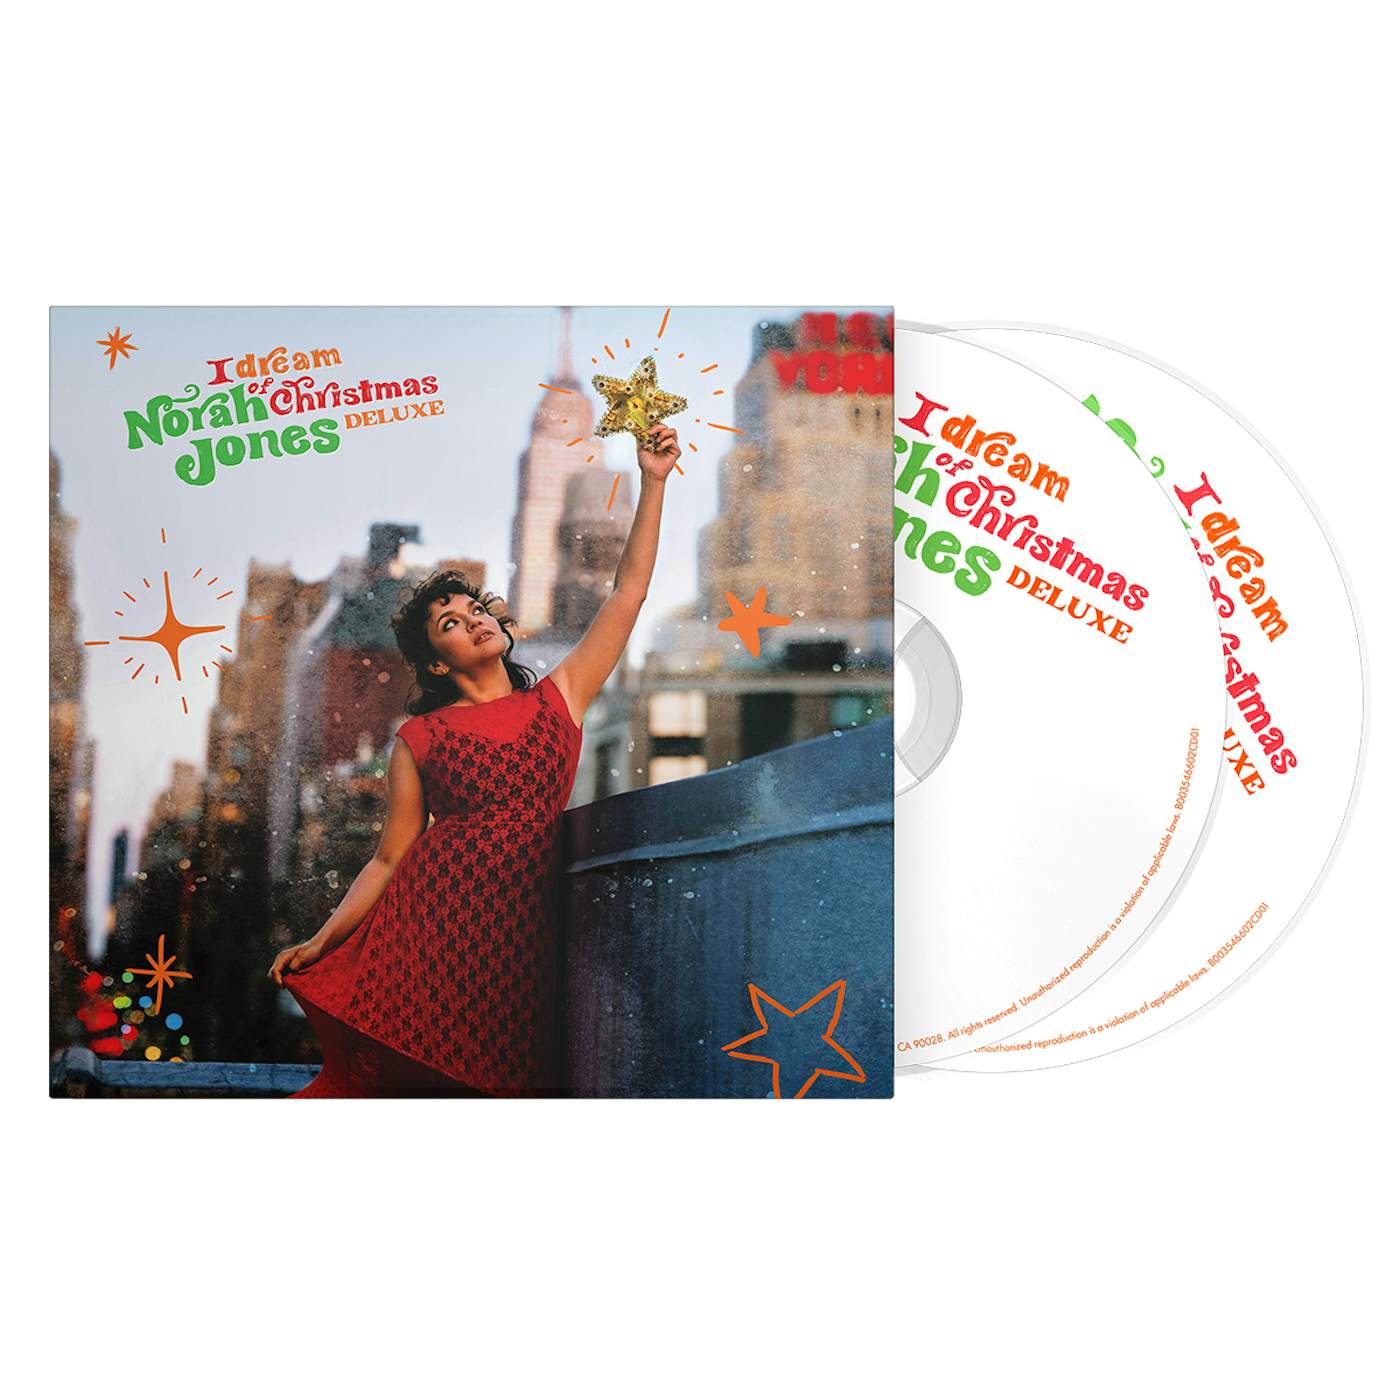 Norah Jones I Dream of Christmas Deluxe Double CD